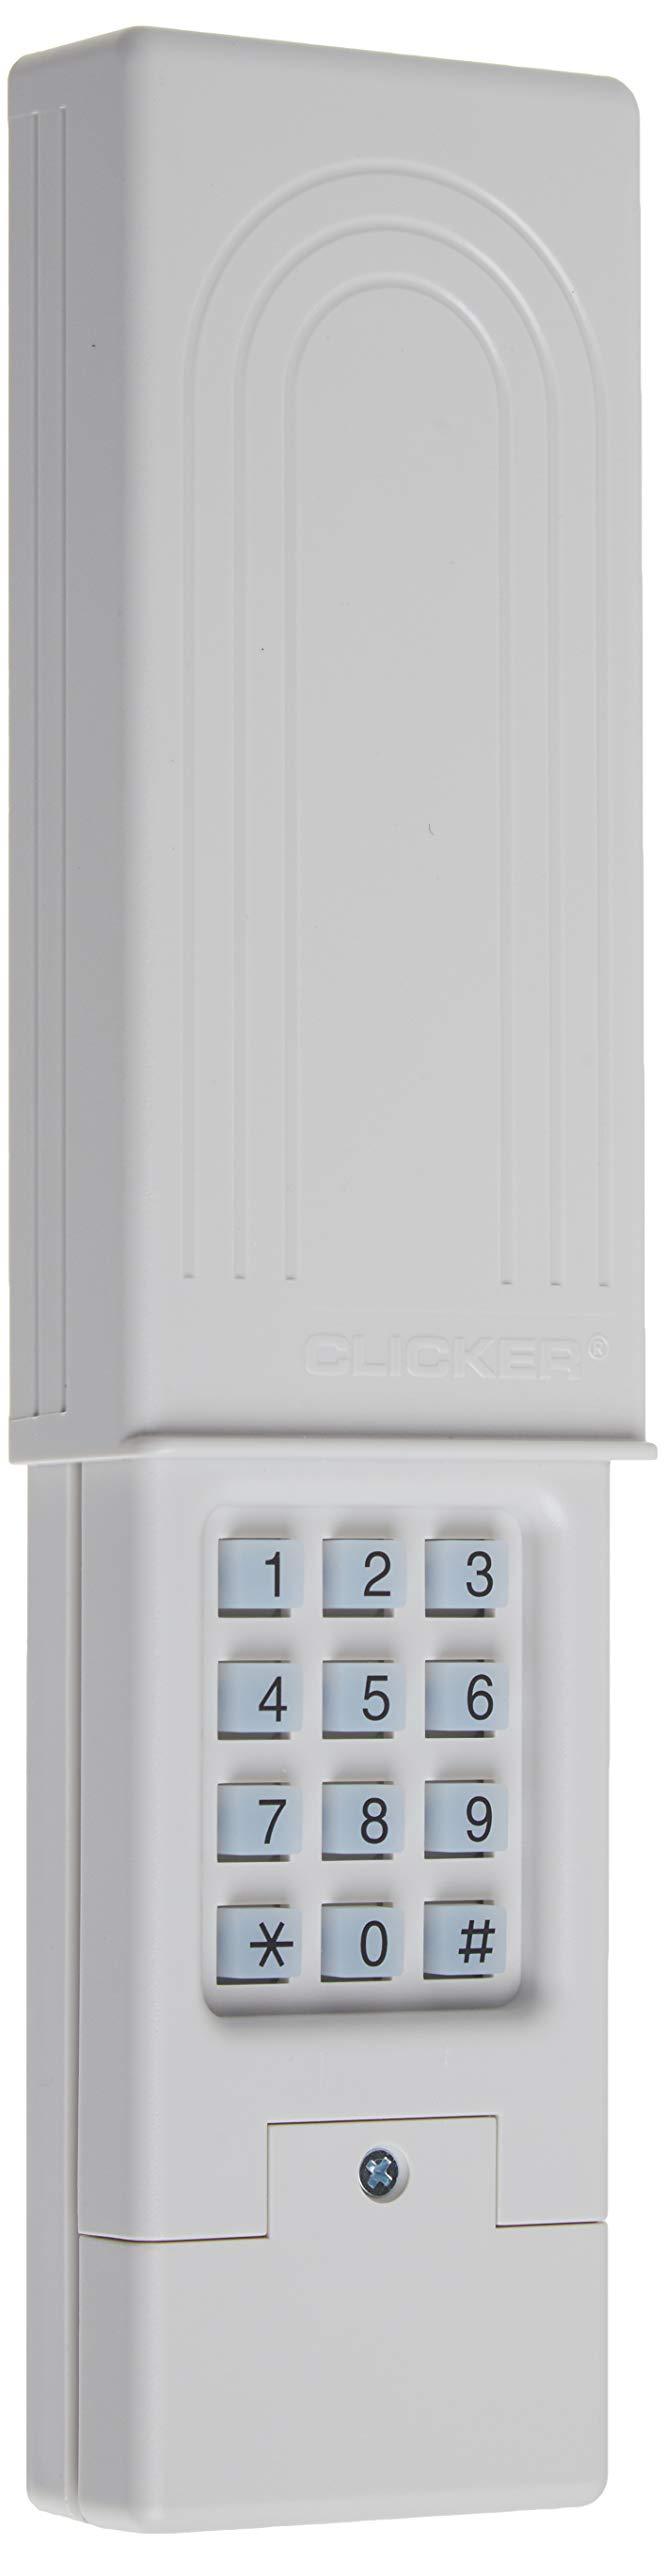 Chamberlain Group Clicker Universal Keyless Entry KLIK2U-P2, Works with Chamberlain, LiftMaster, Craftsman, Genie and More, Security +2.0 Compatible Garage Door Opener Keypad, White - NewNest Australia